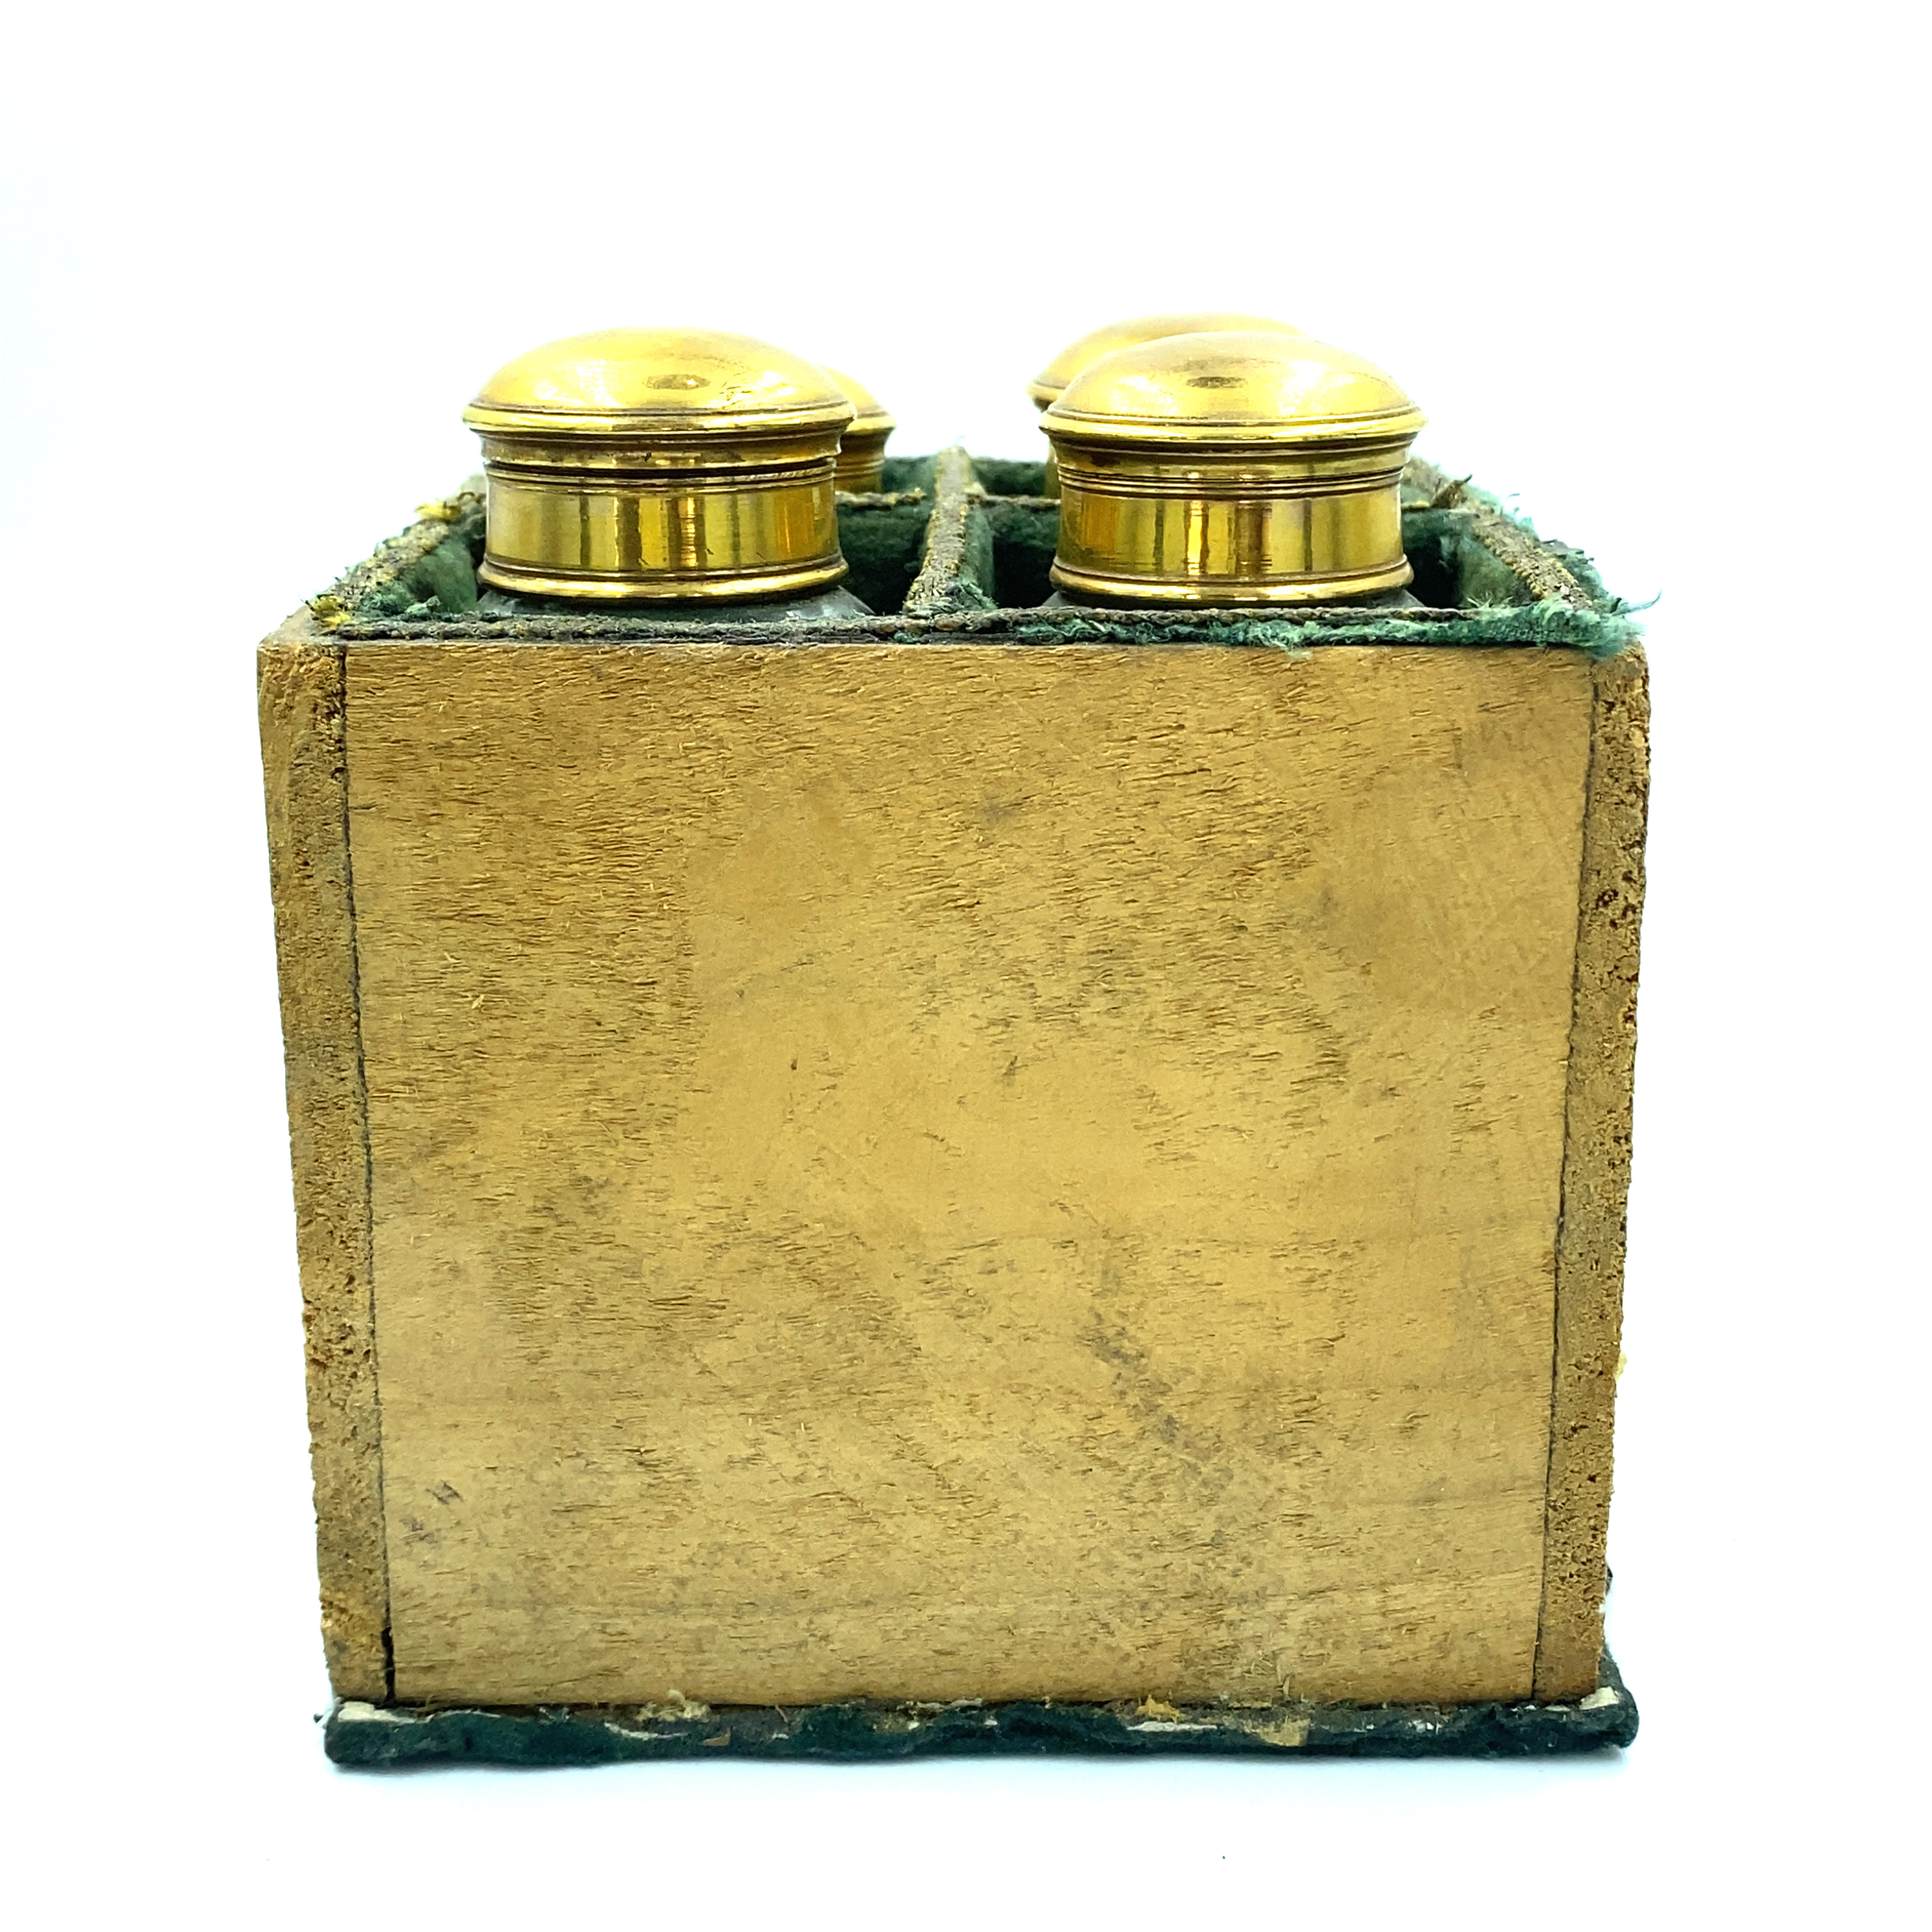 Four Perfume Bottles - Image 5 of 5